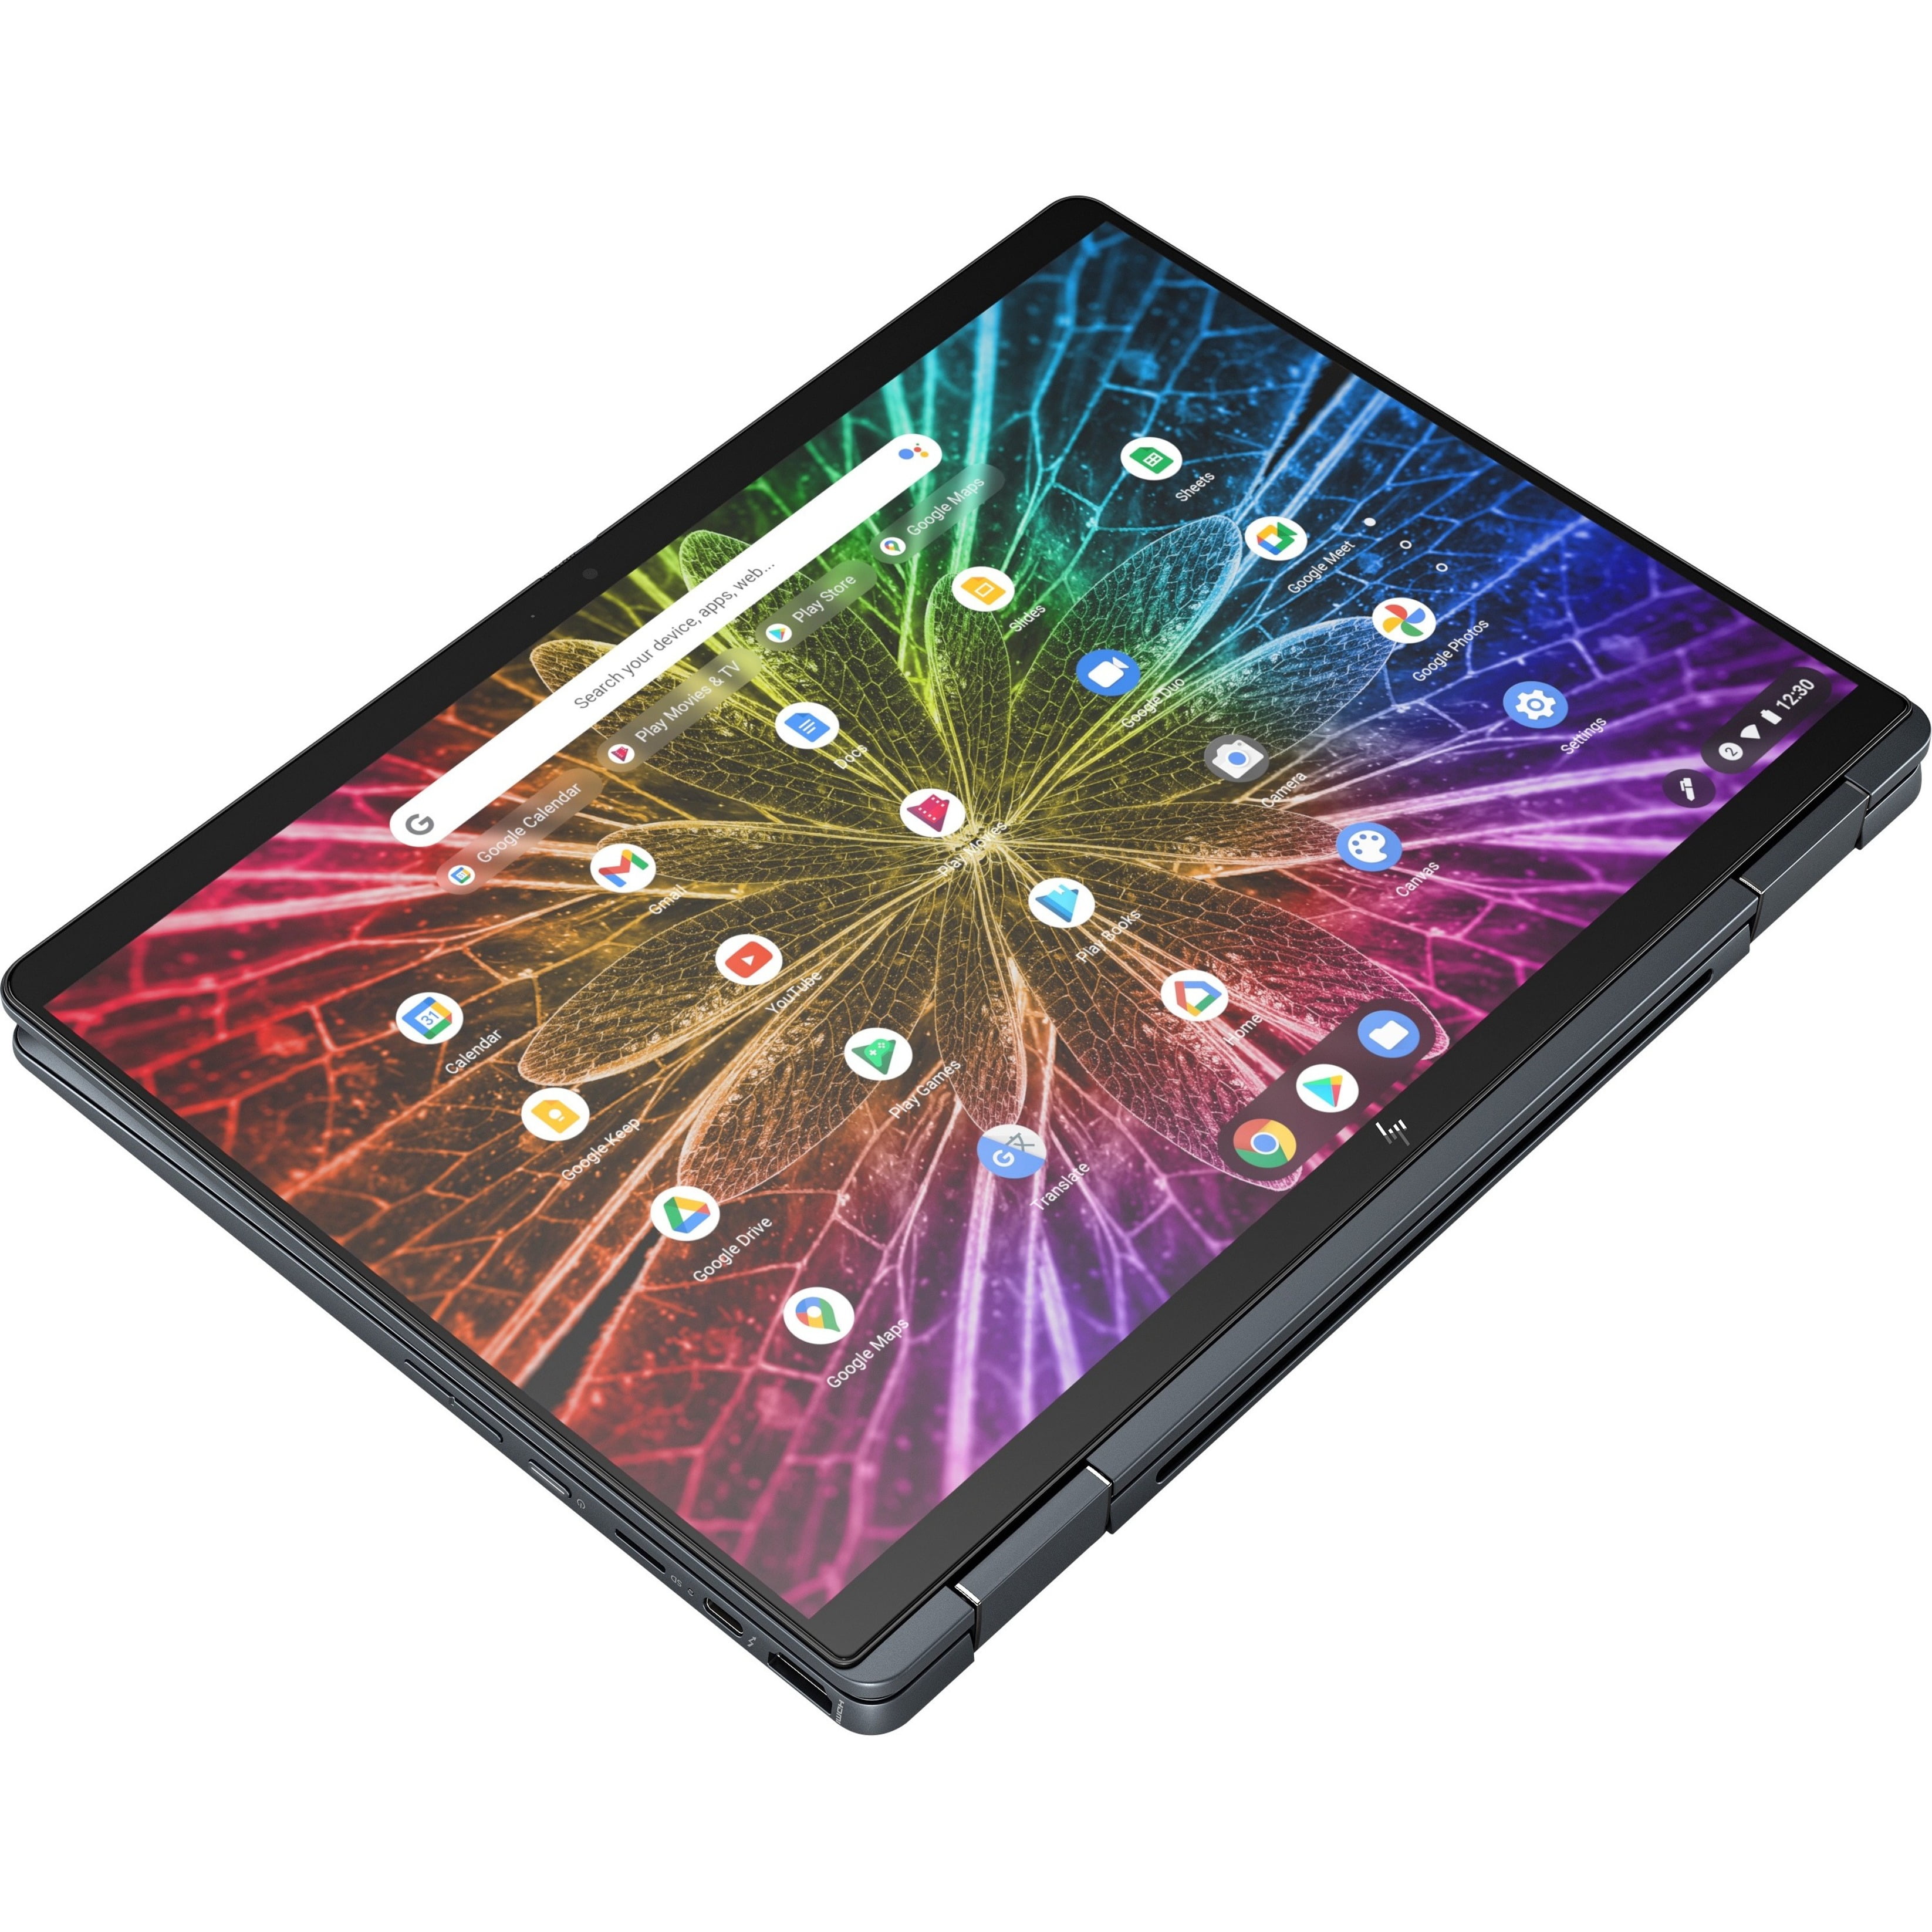 HP Elite Dragonfly Chromebook: Impressive, Flawed, Expensive